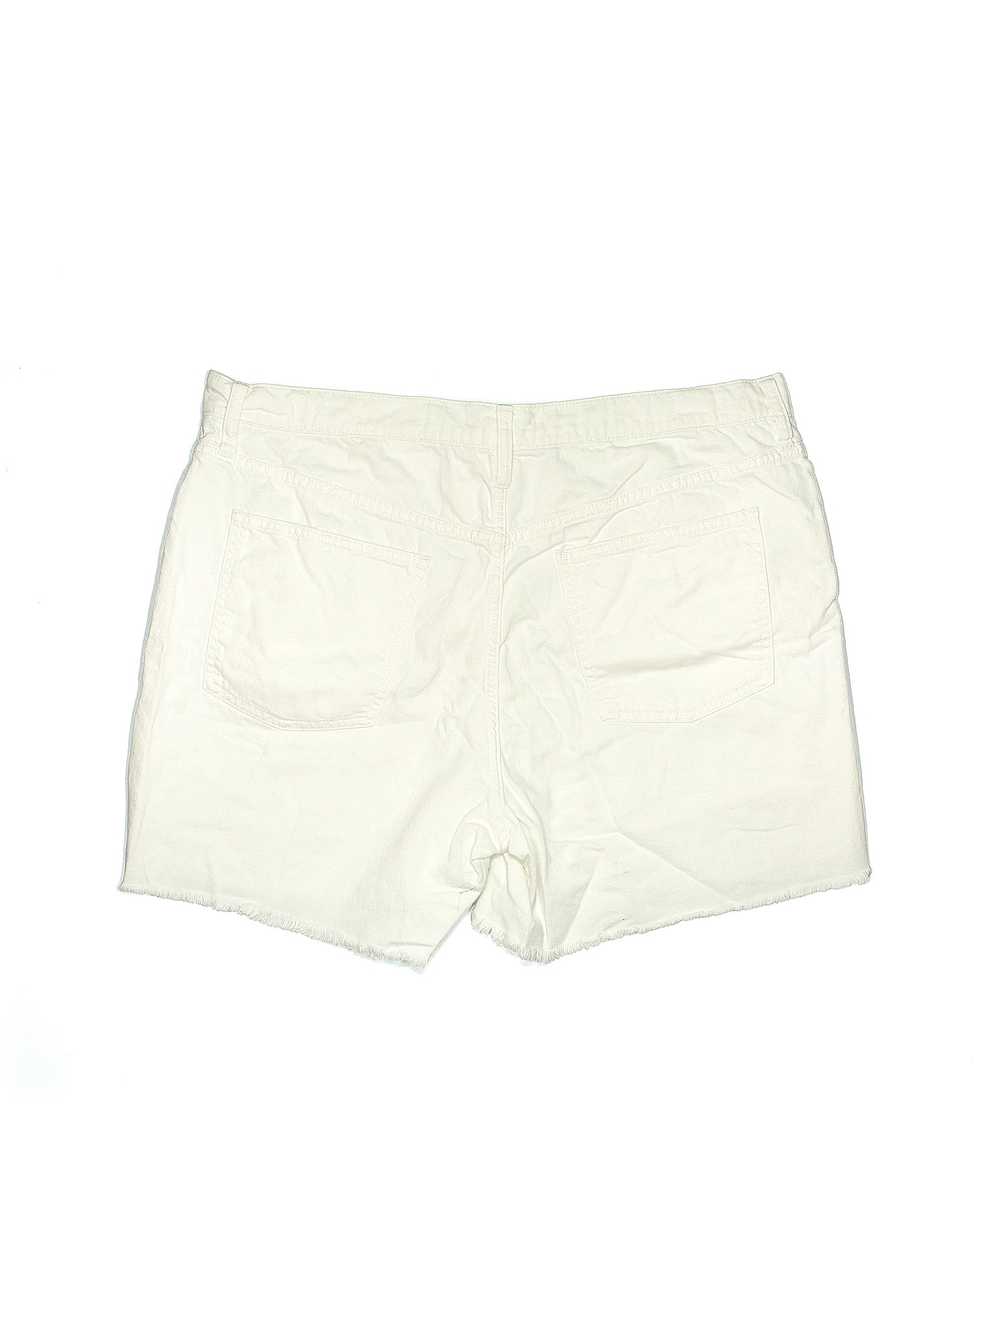 Gap Women Ivory Denim Shorts 34W - image 2